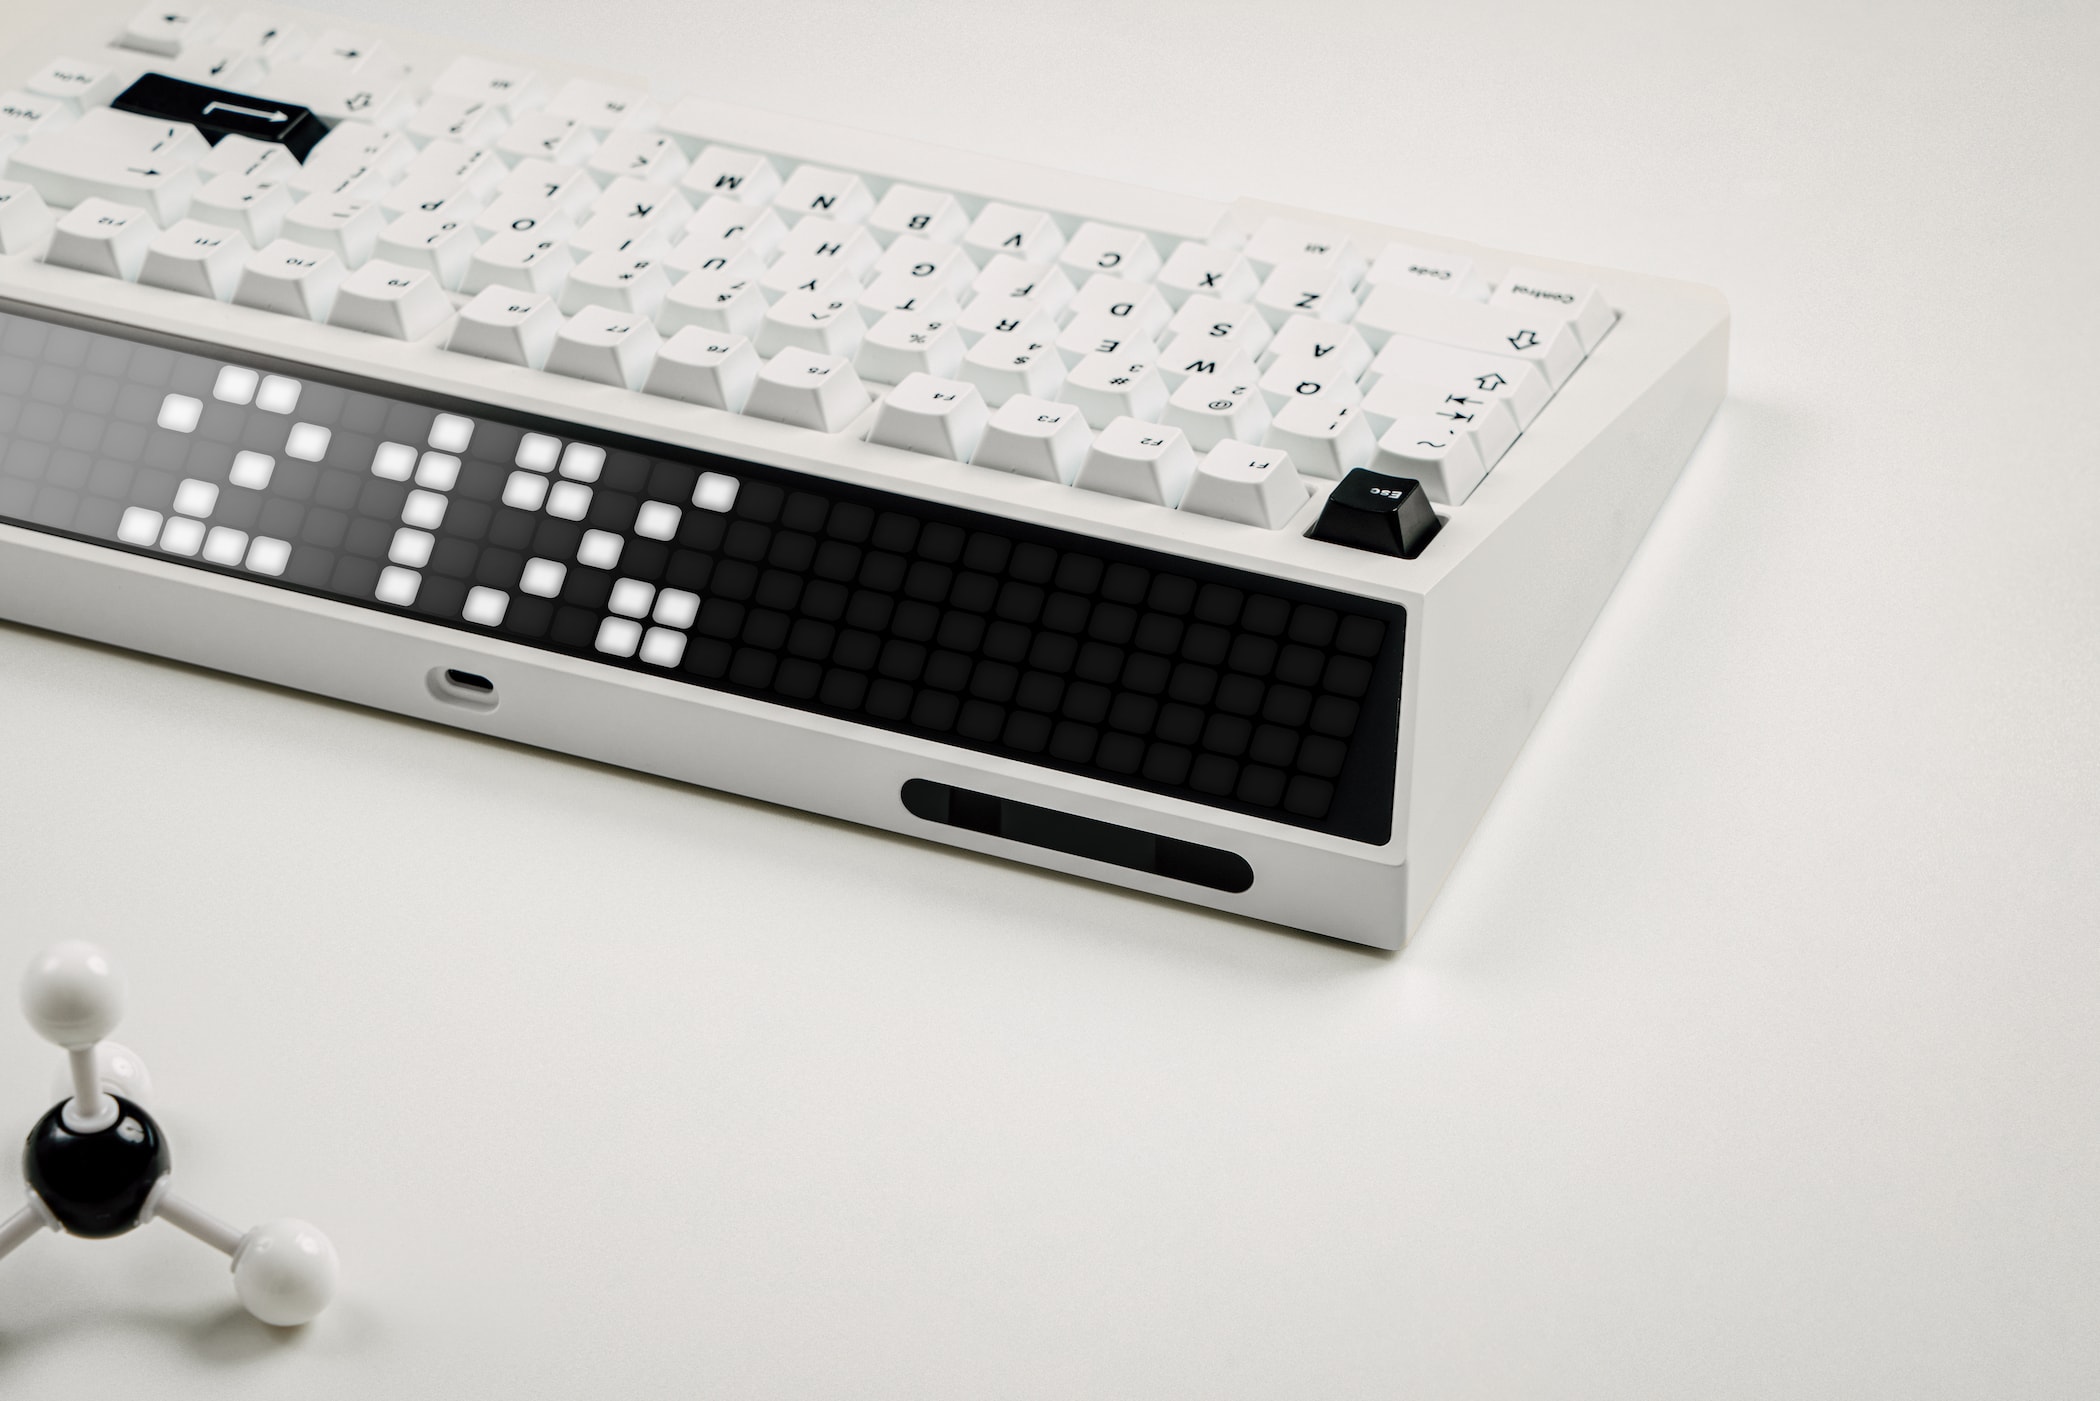 Angry Miao 推出全新 CYBERBOARD R3 键盘系列